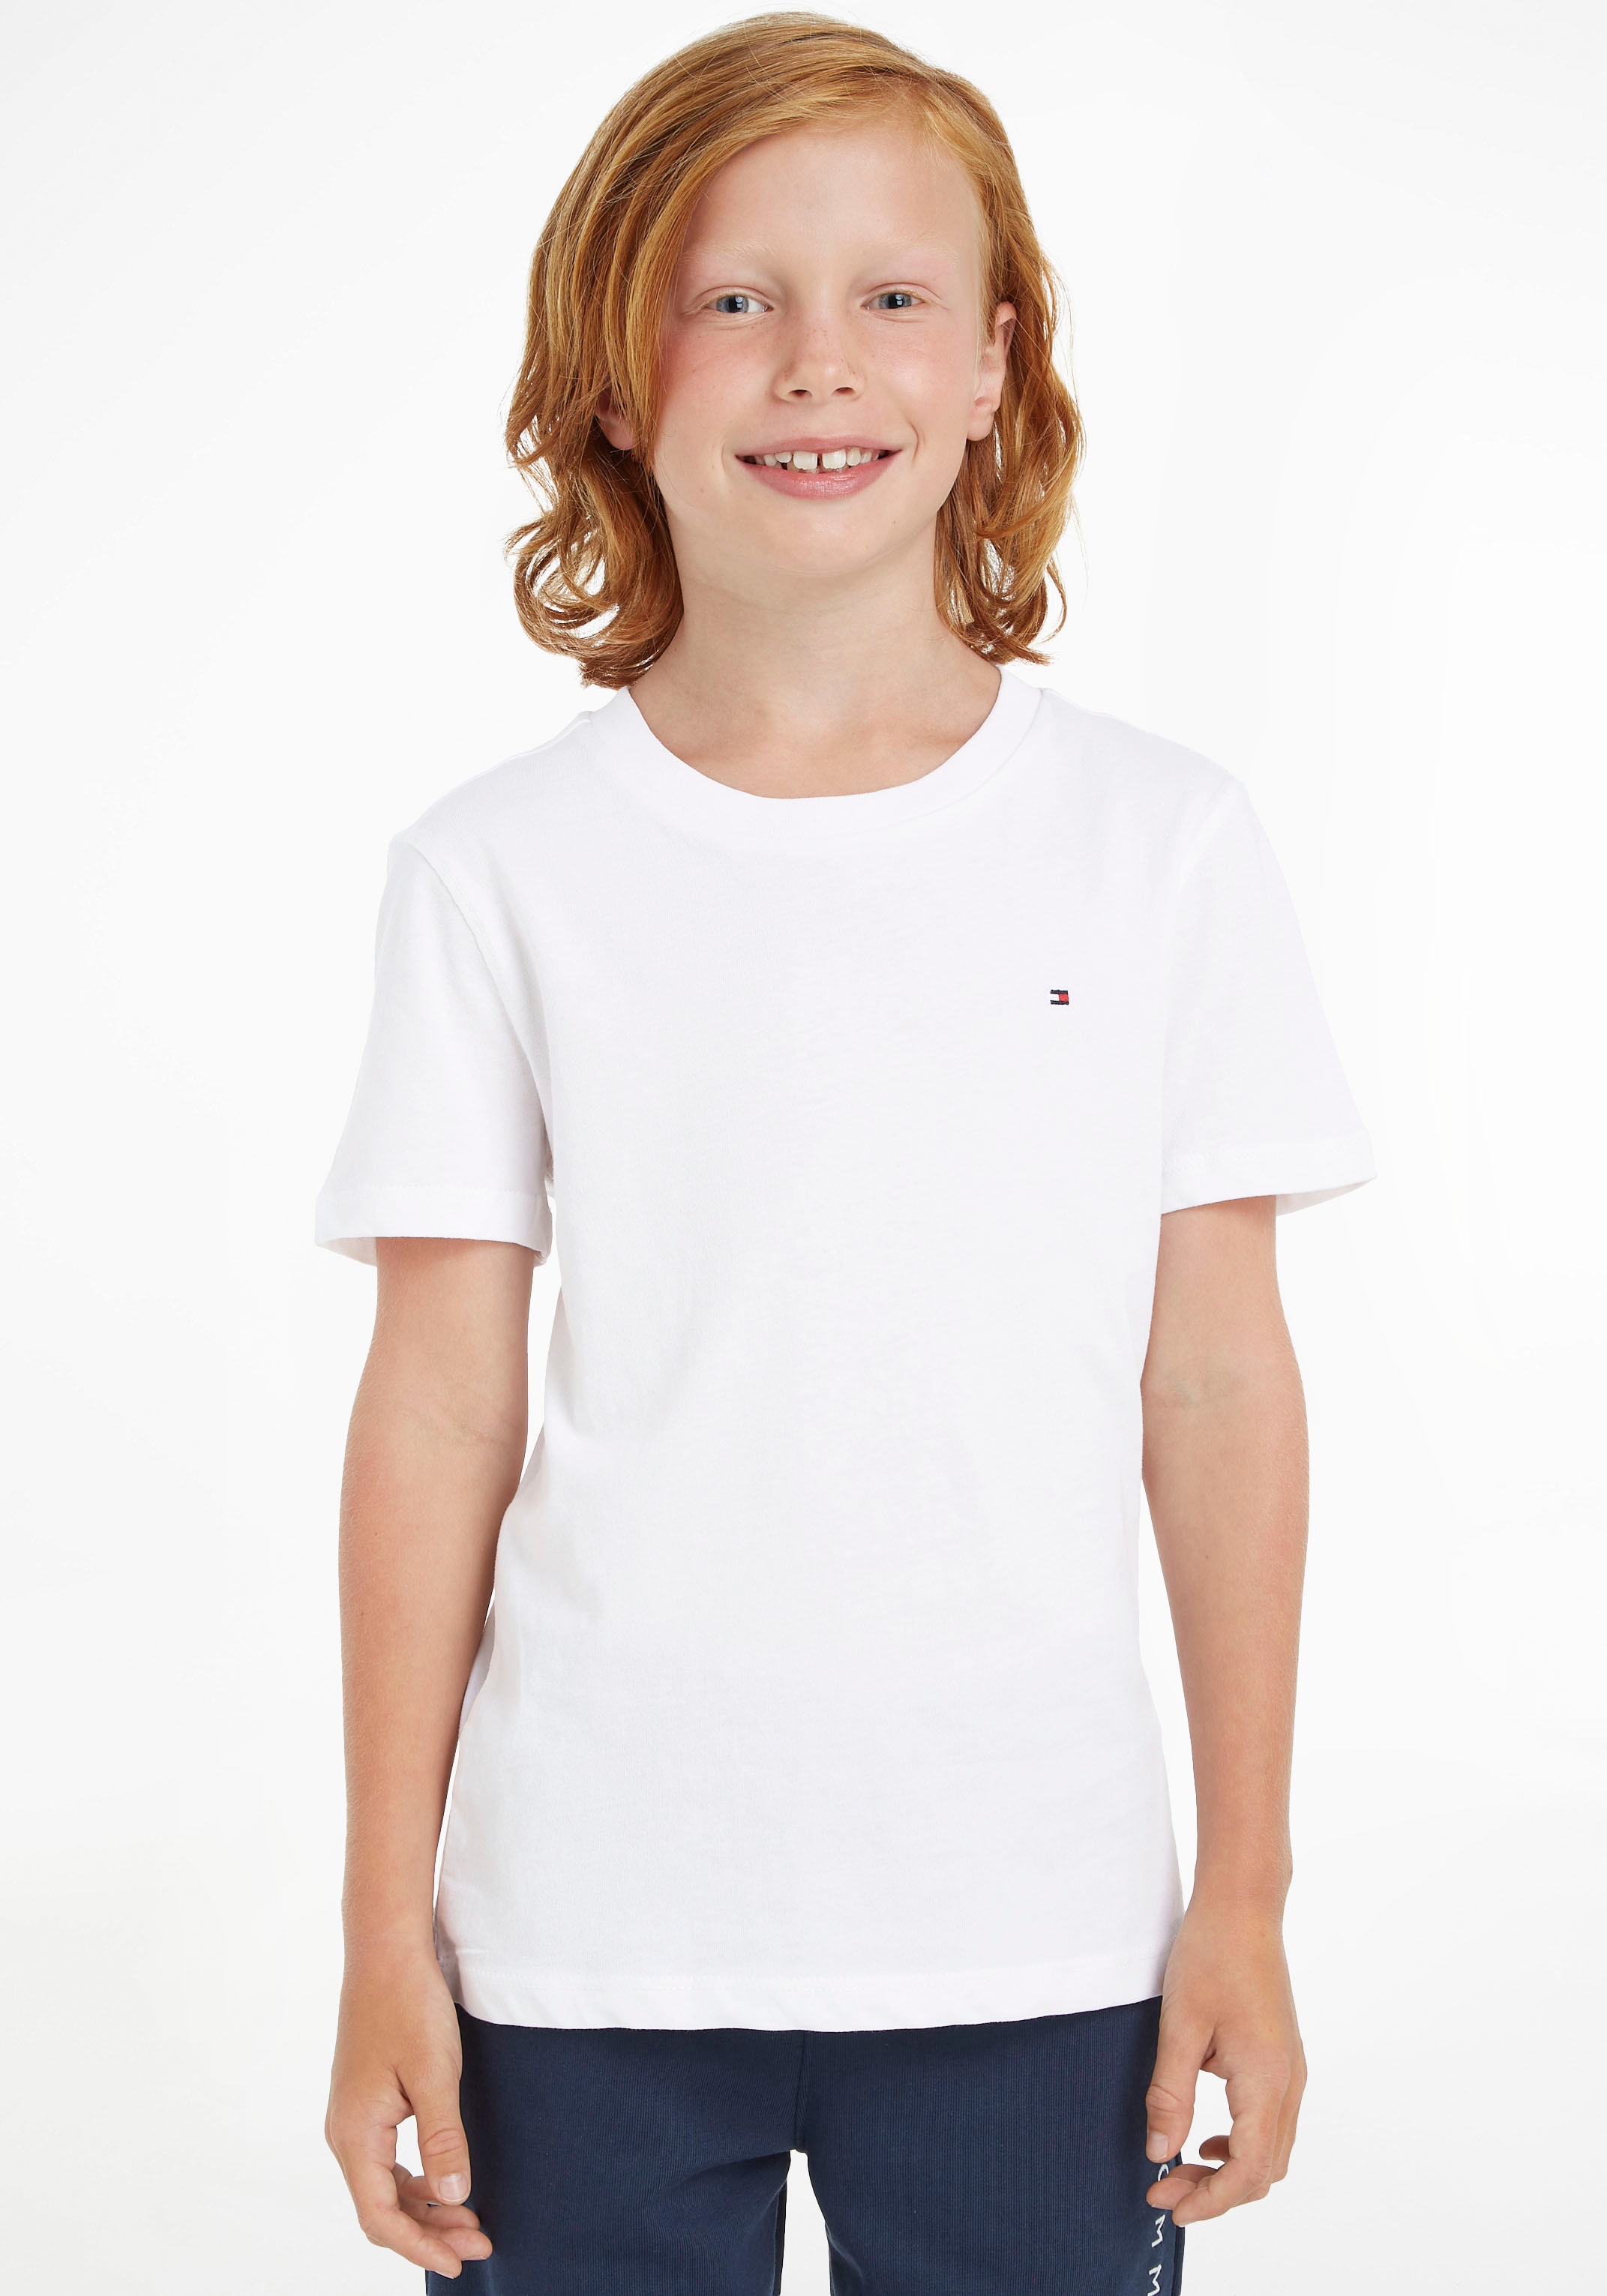 Tommy Hilfiger T-Shirt Kids bestellen Kinder Junior MiniMe KNIT«, CN BASIC »BOYS